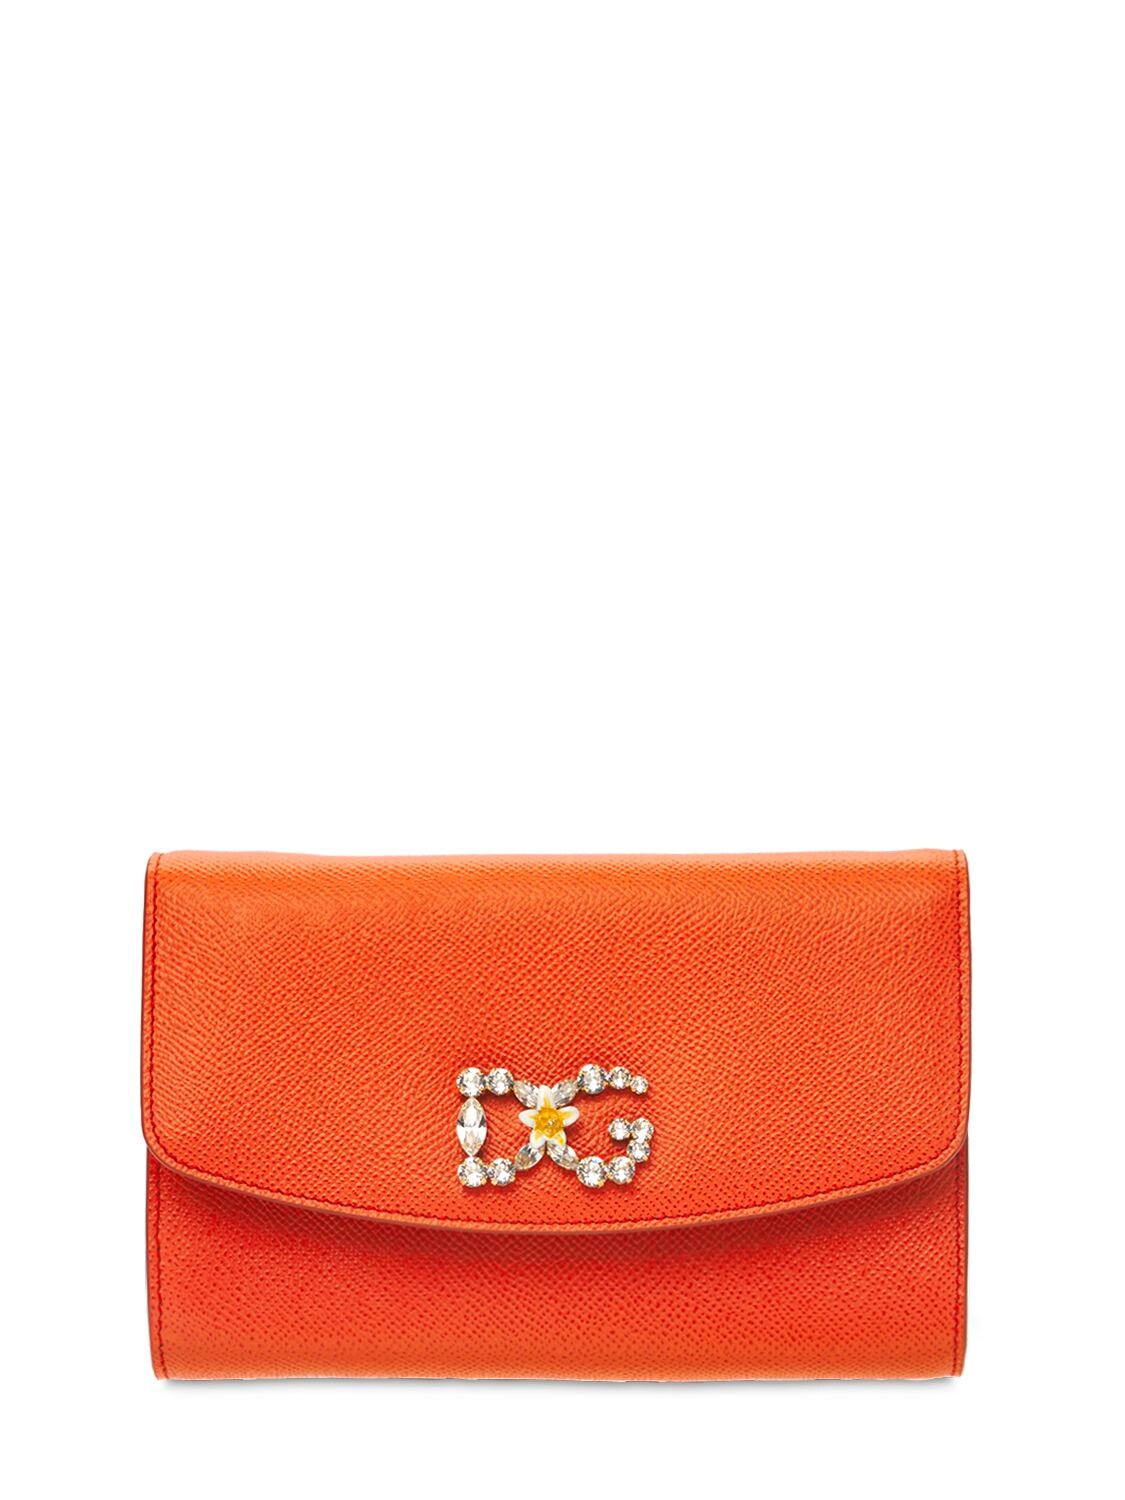 Dolce & Gabbana Dauphine Embellished Leather Bag In Orange